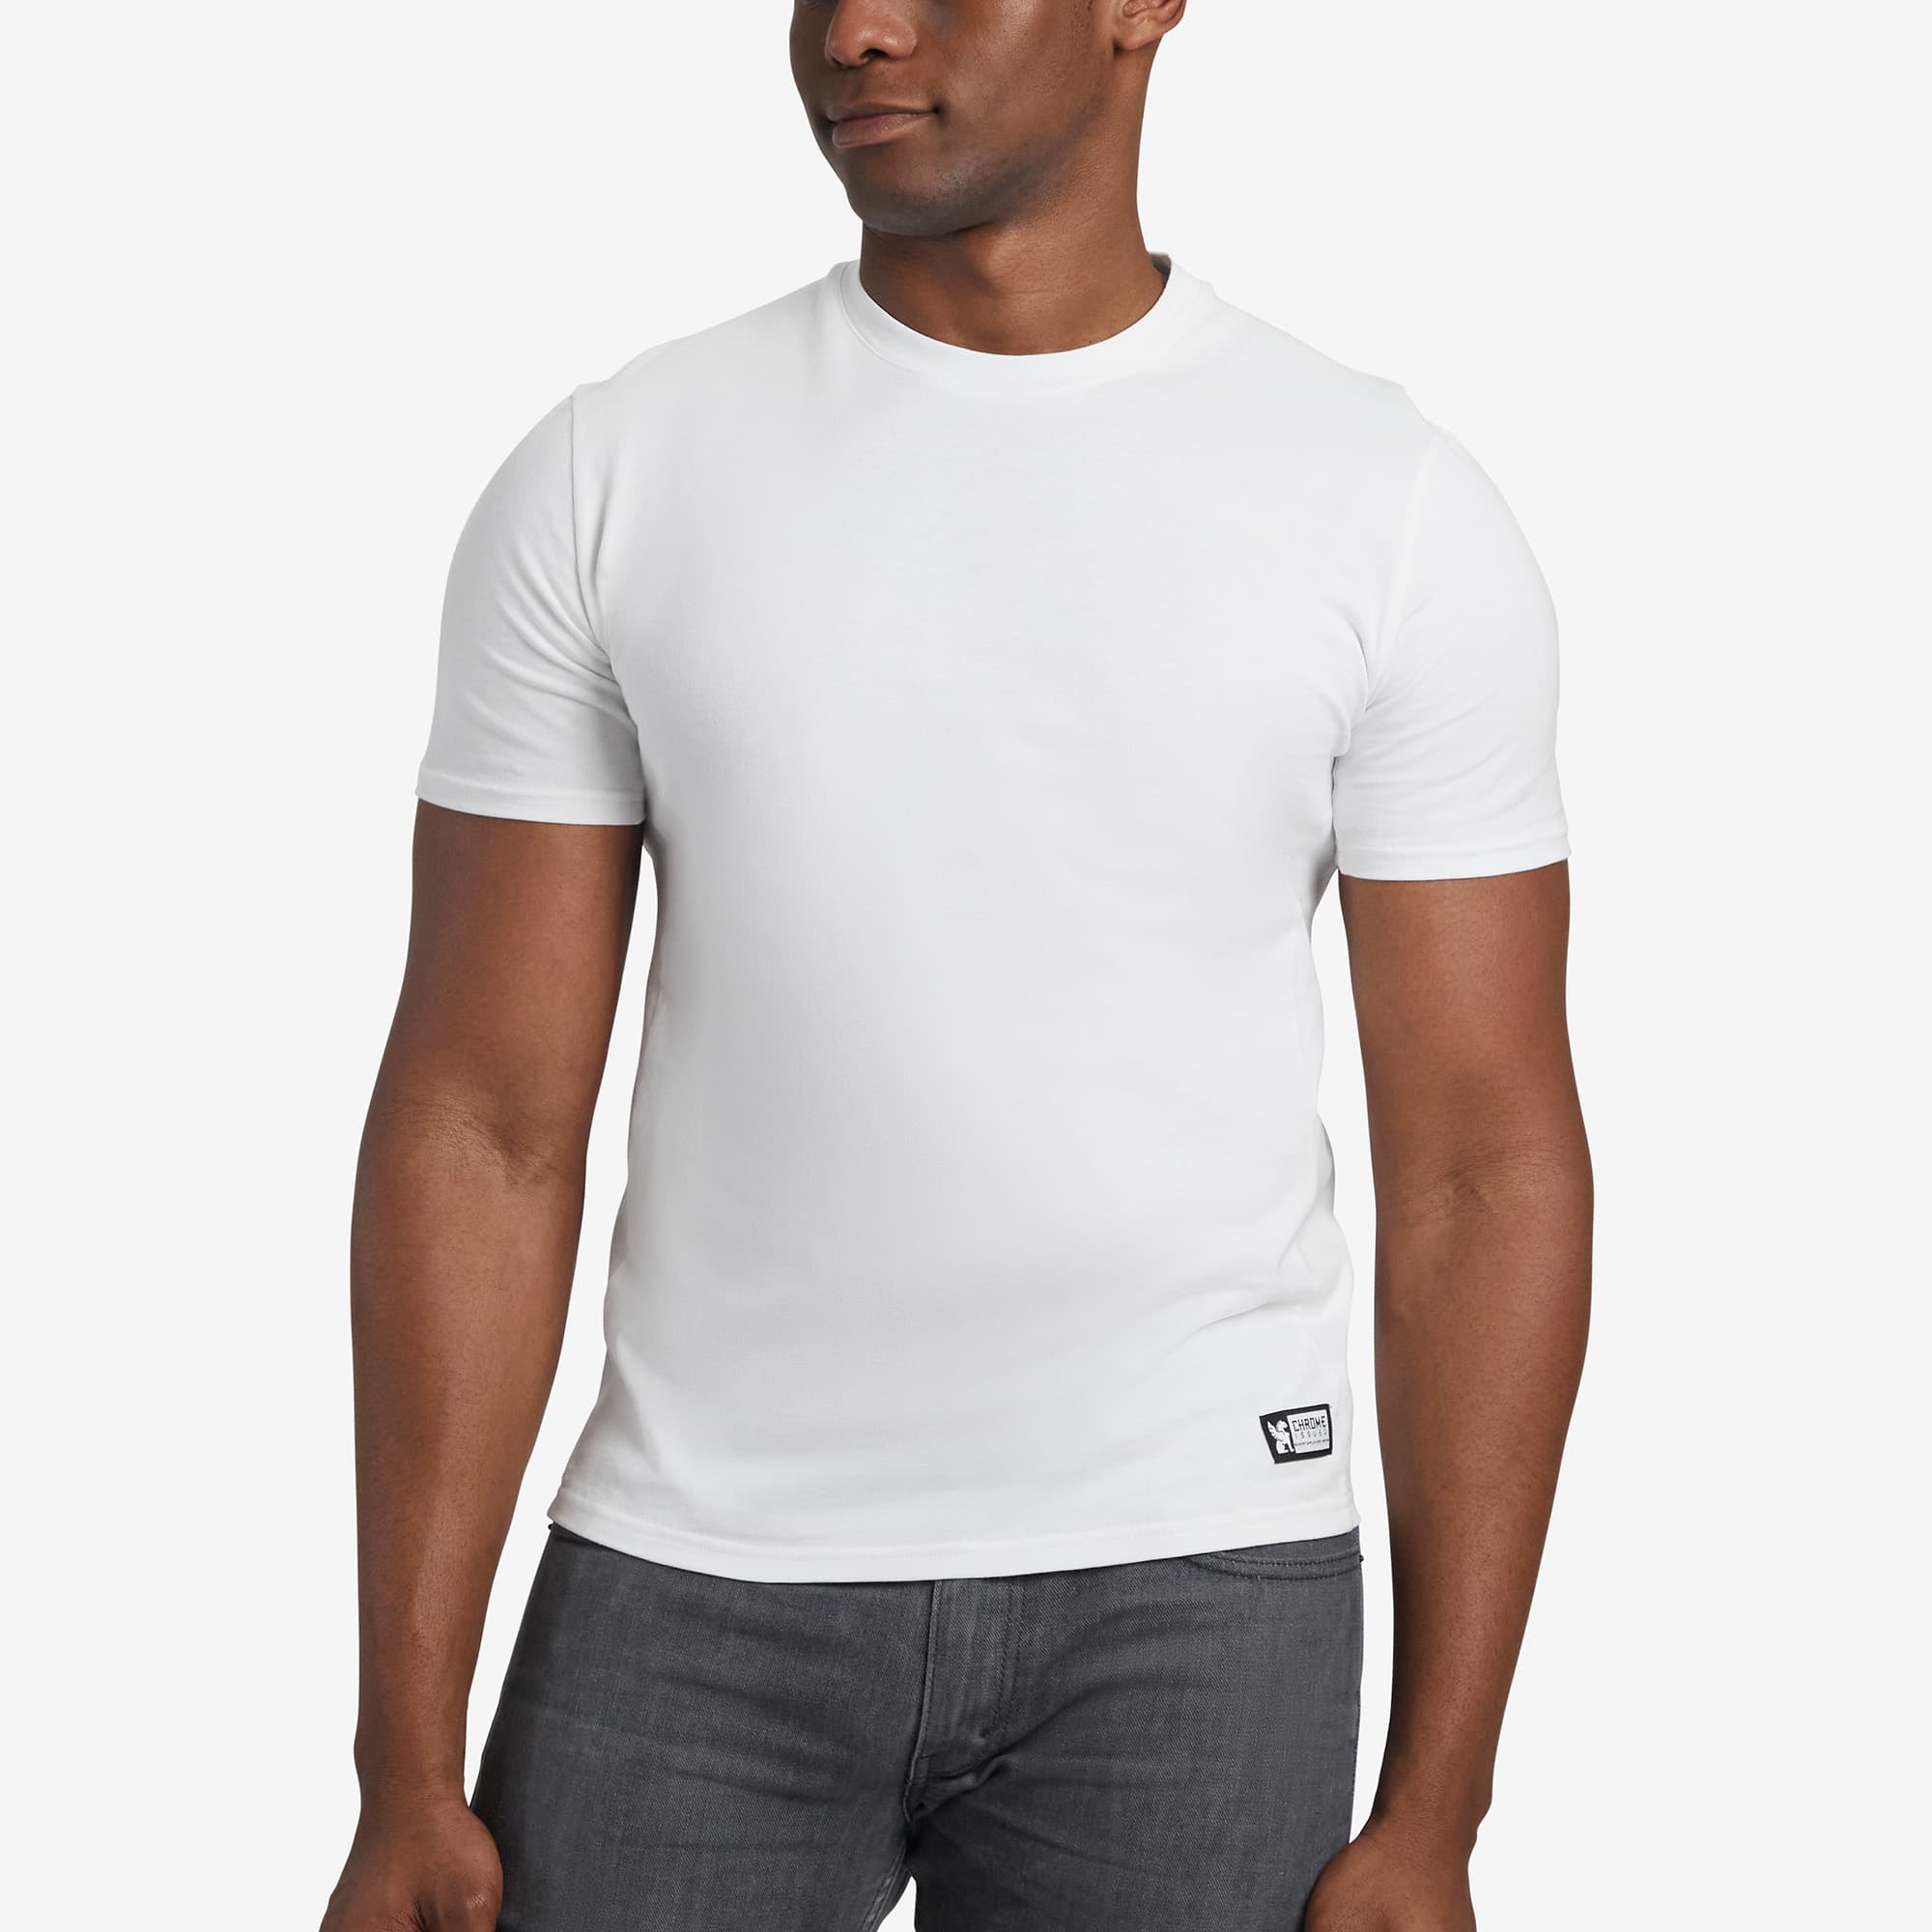 Men's Chrome basics T-shirt short sleeve in white worn by a man #color_white